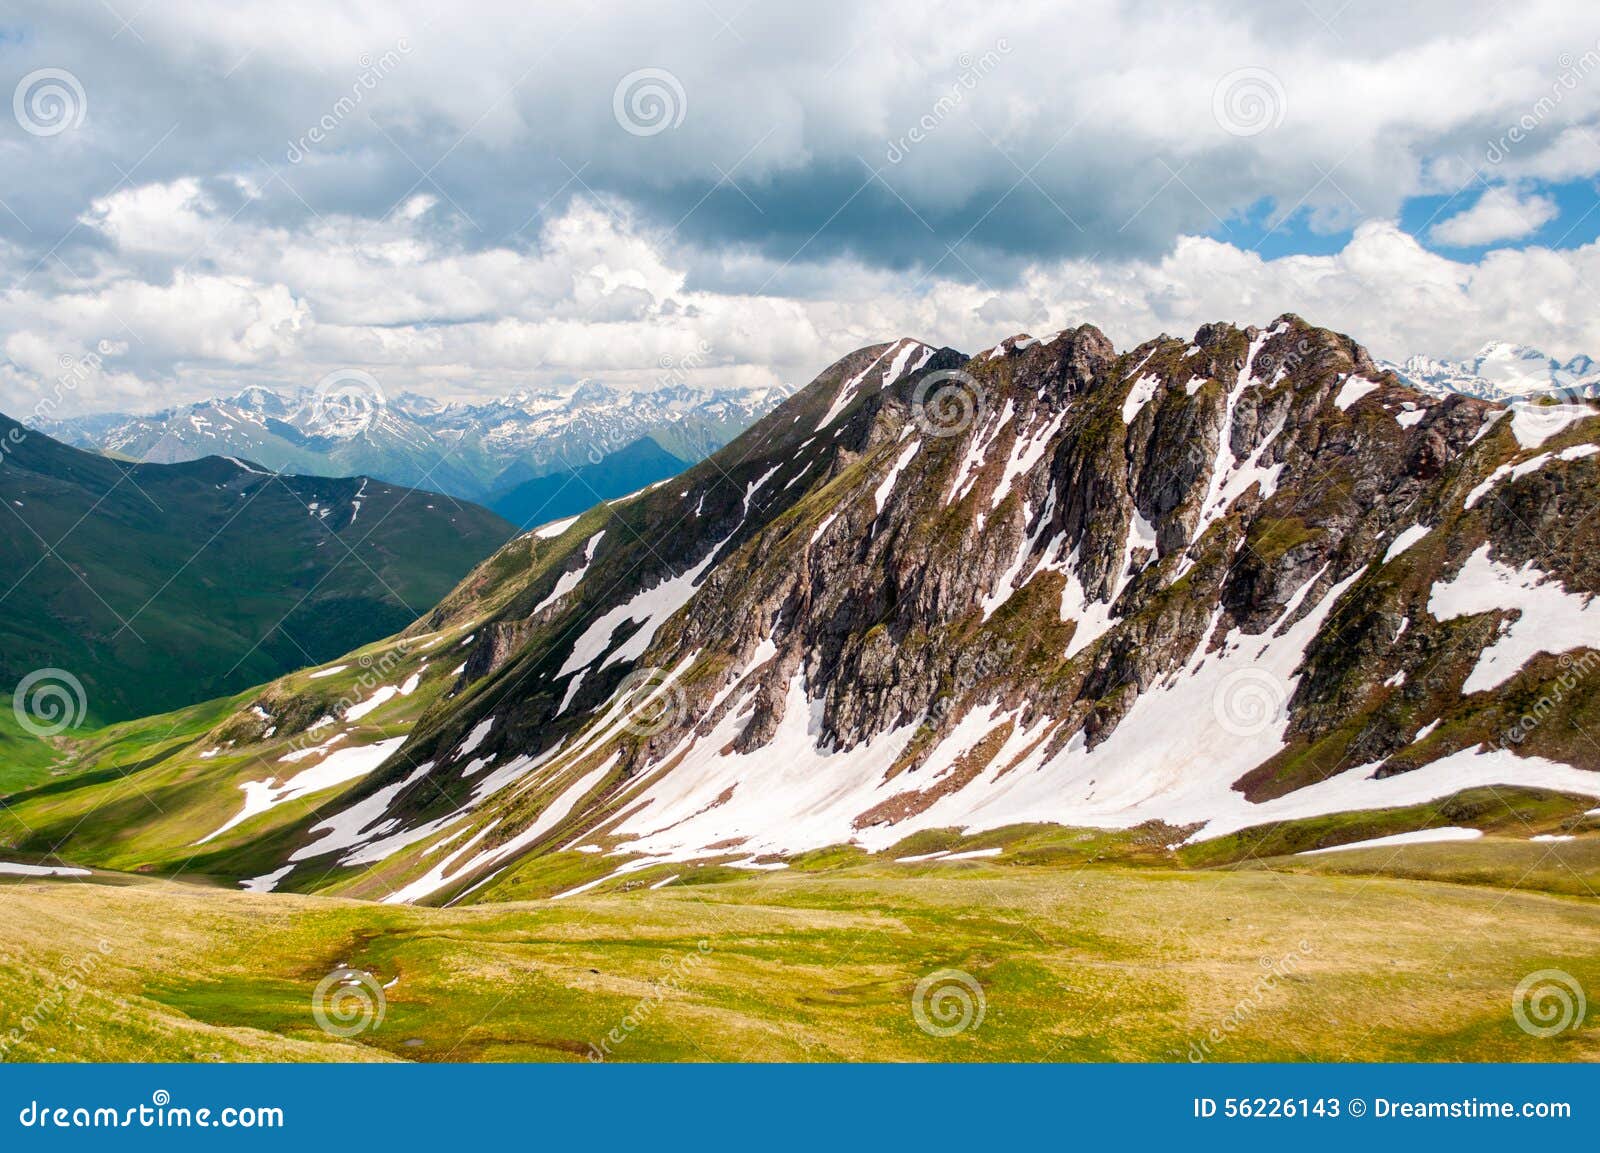 Caucasus Mountains stock image. Image of peak, wallpaper - 56226143